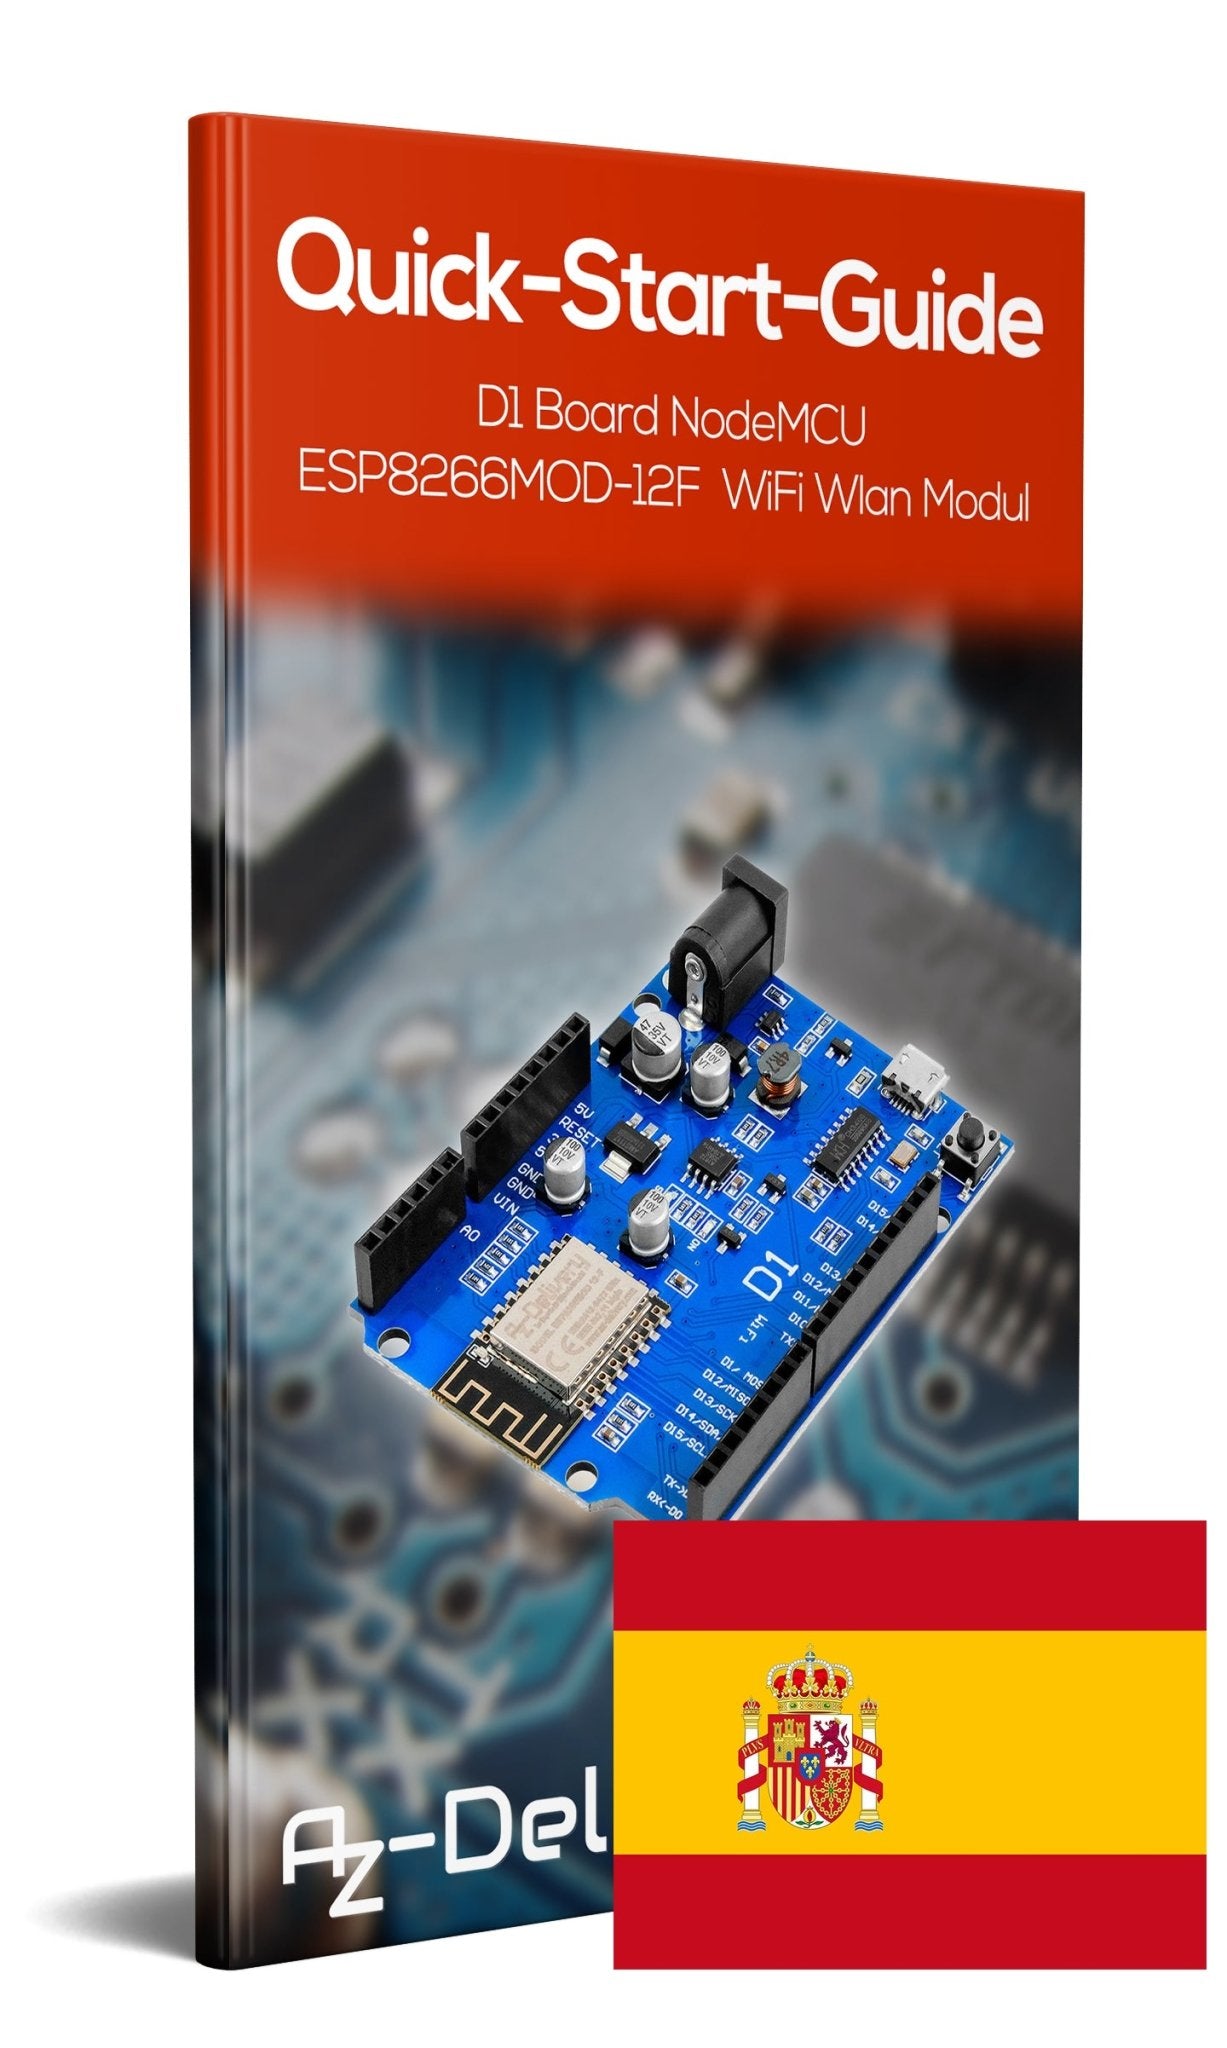 D1 Board NodeMCU ESP8266MOD-12F WiFi Wlan Modul - AZ-Delivery